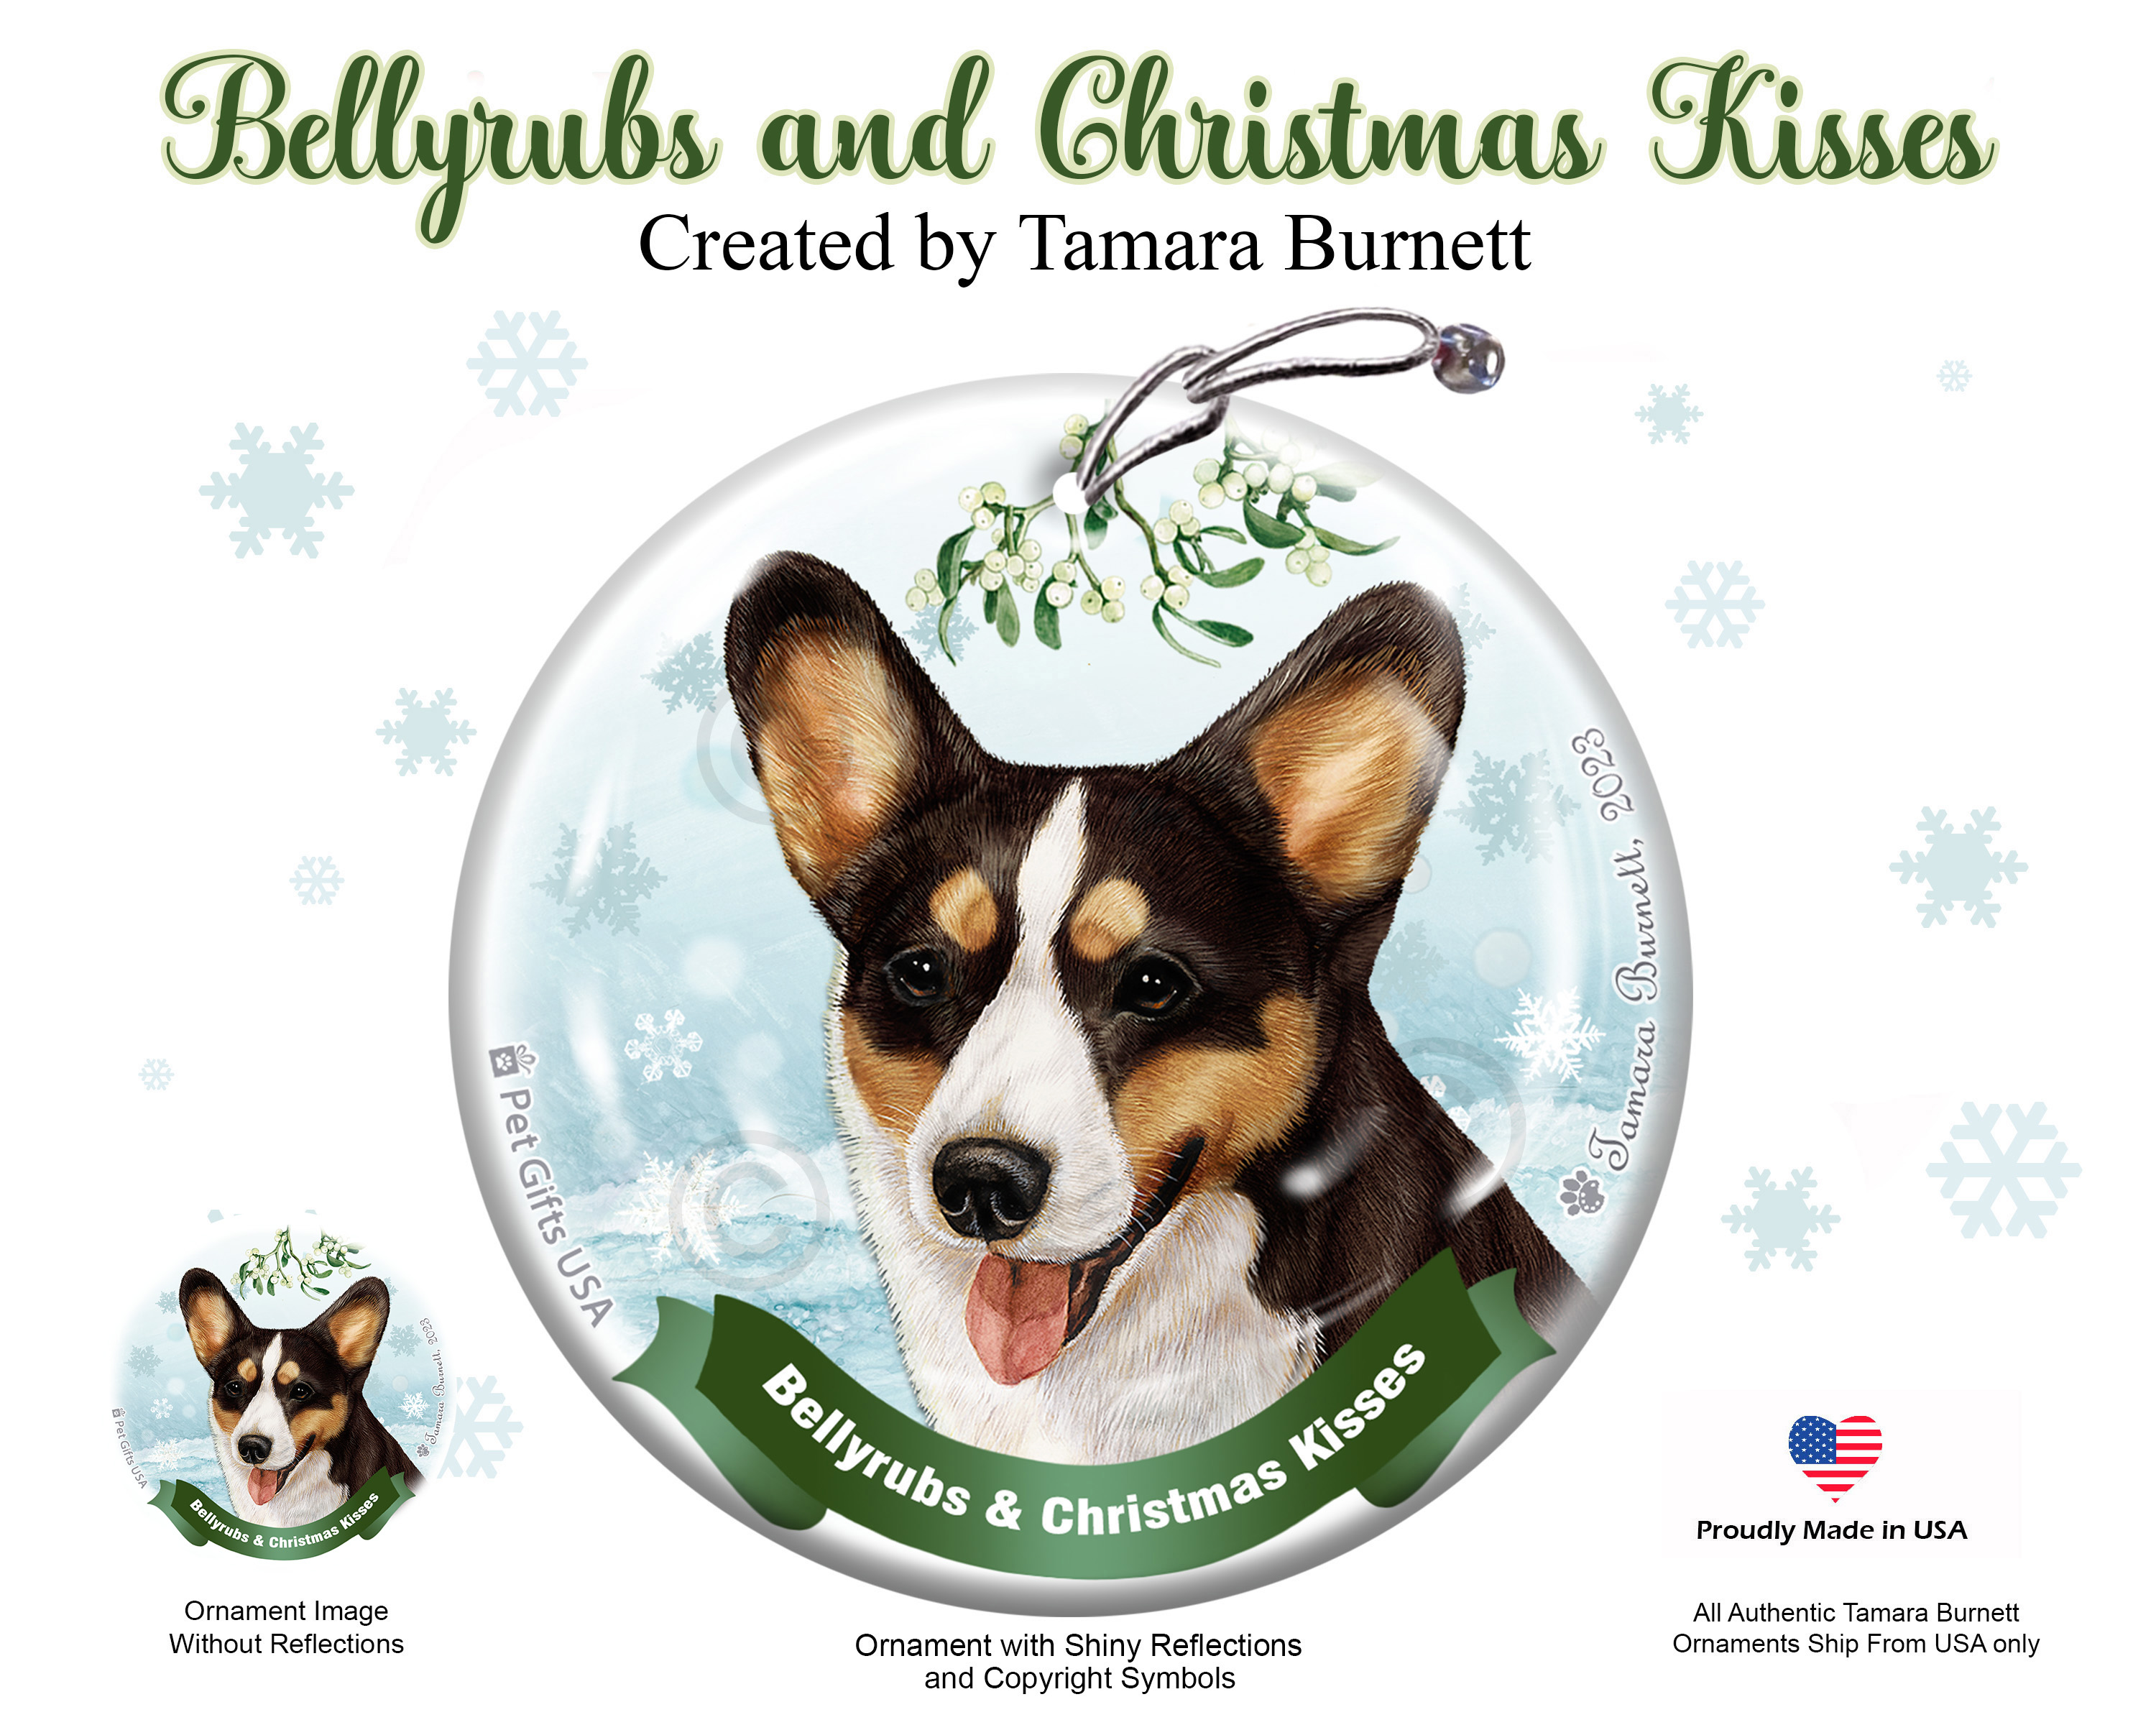 Corgi Cardigan Tri-Color Belly Rubs and Christmas Kisses Ornament Image